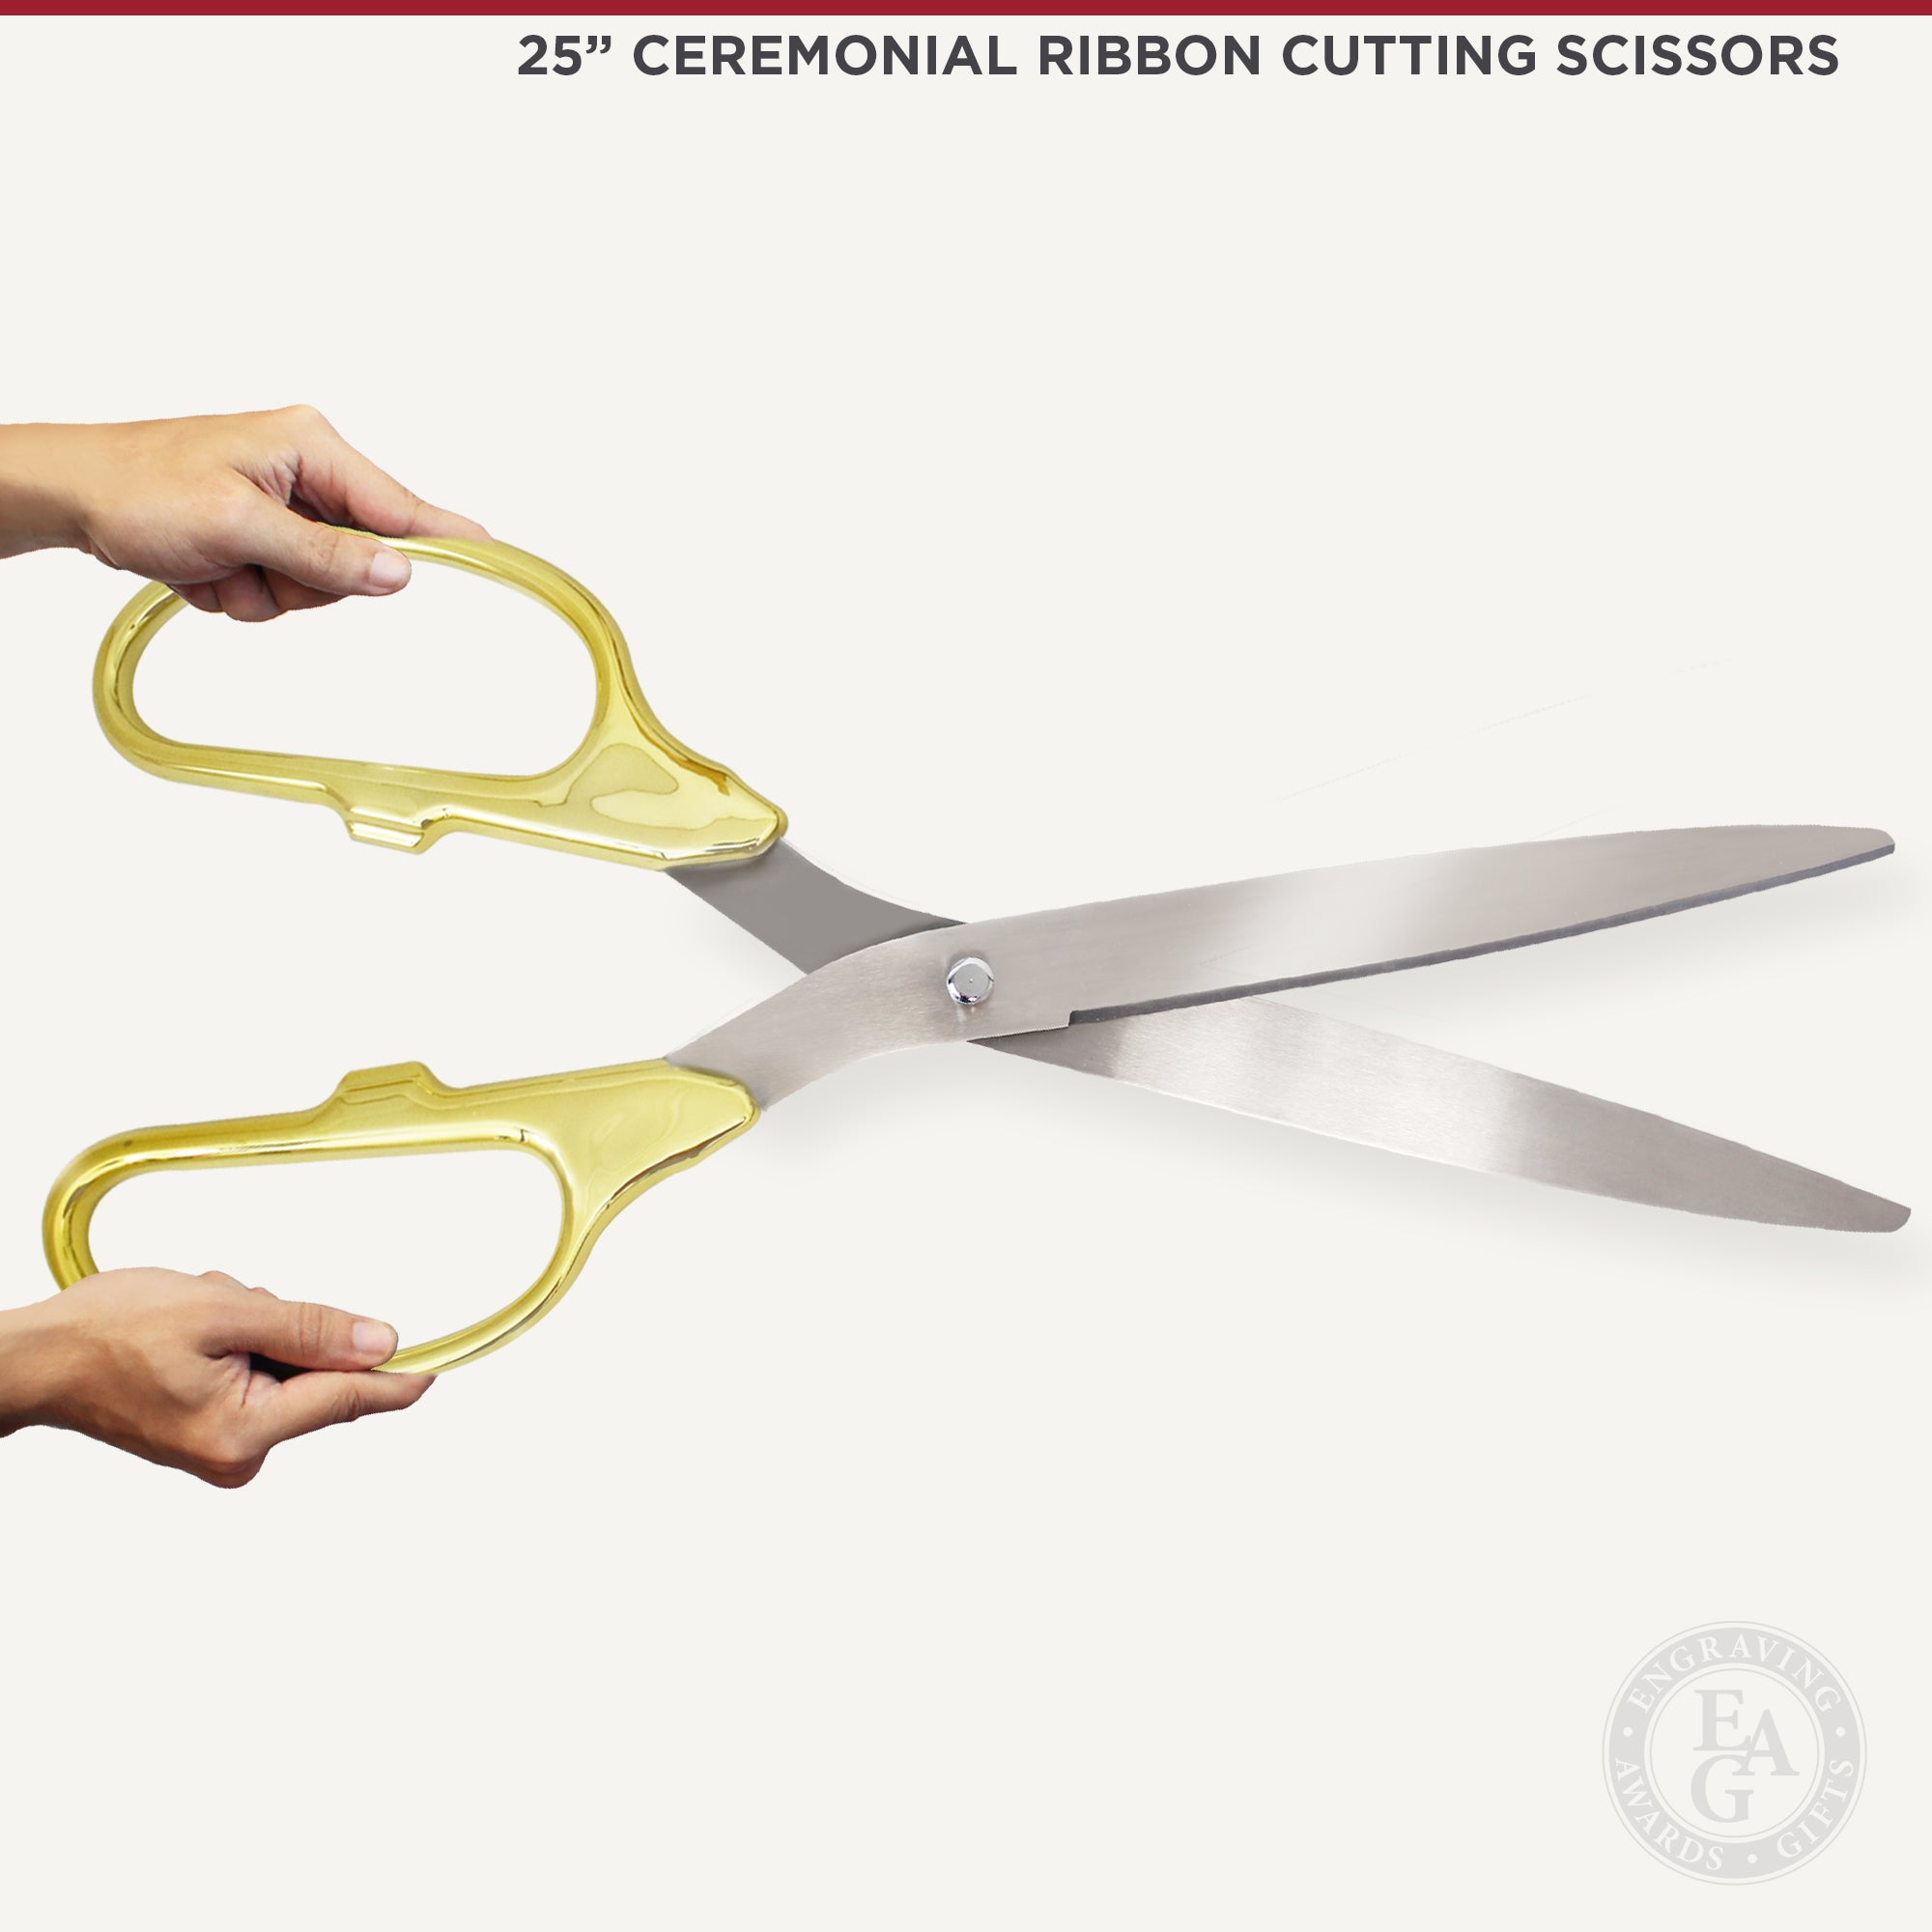 Hand Holding Golden Pair of Ribbon Scissors Isolated on White Ba